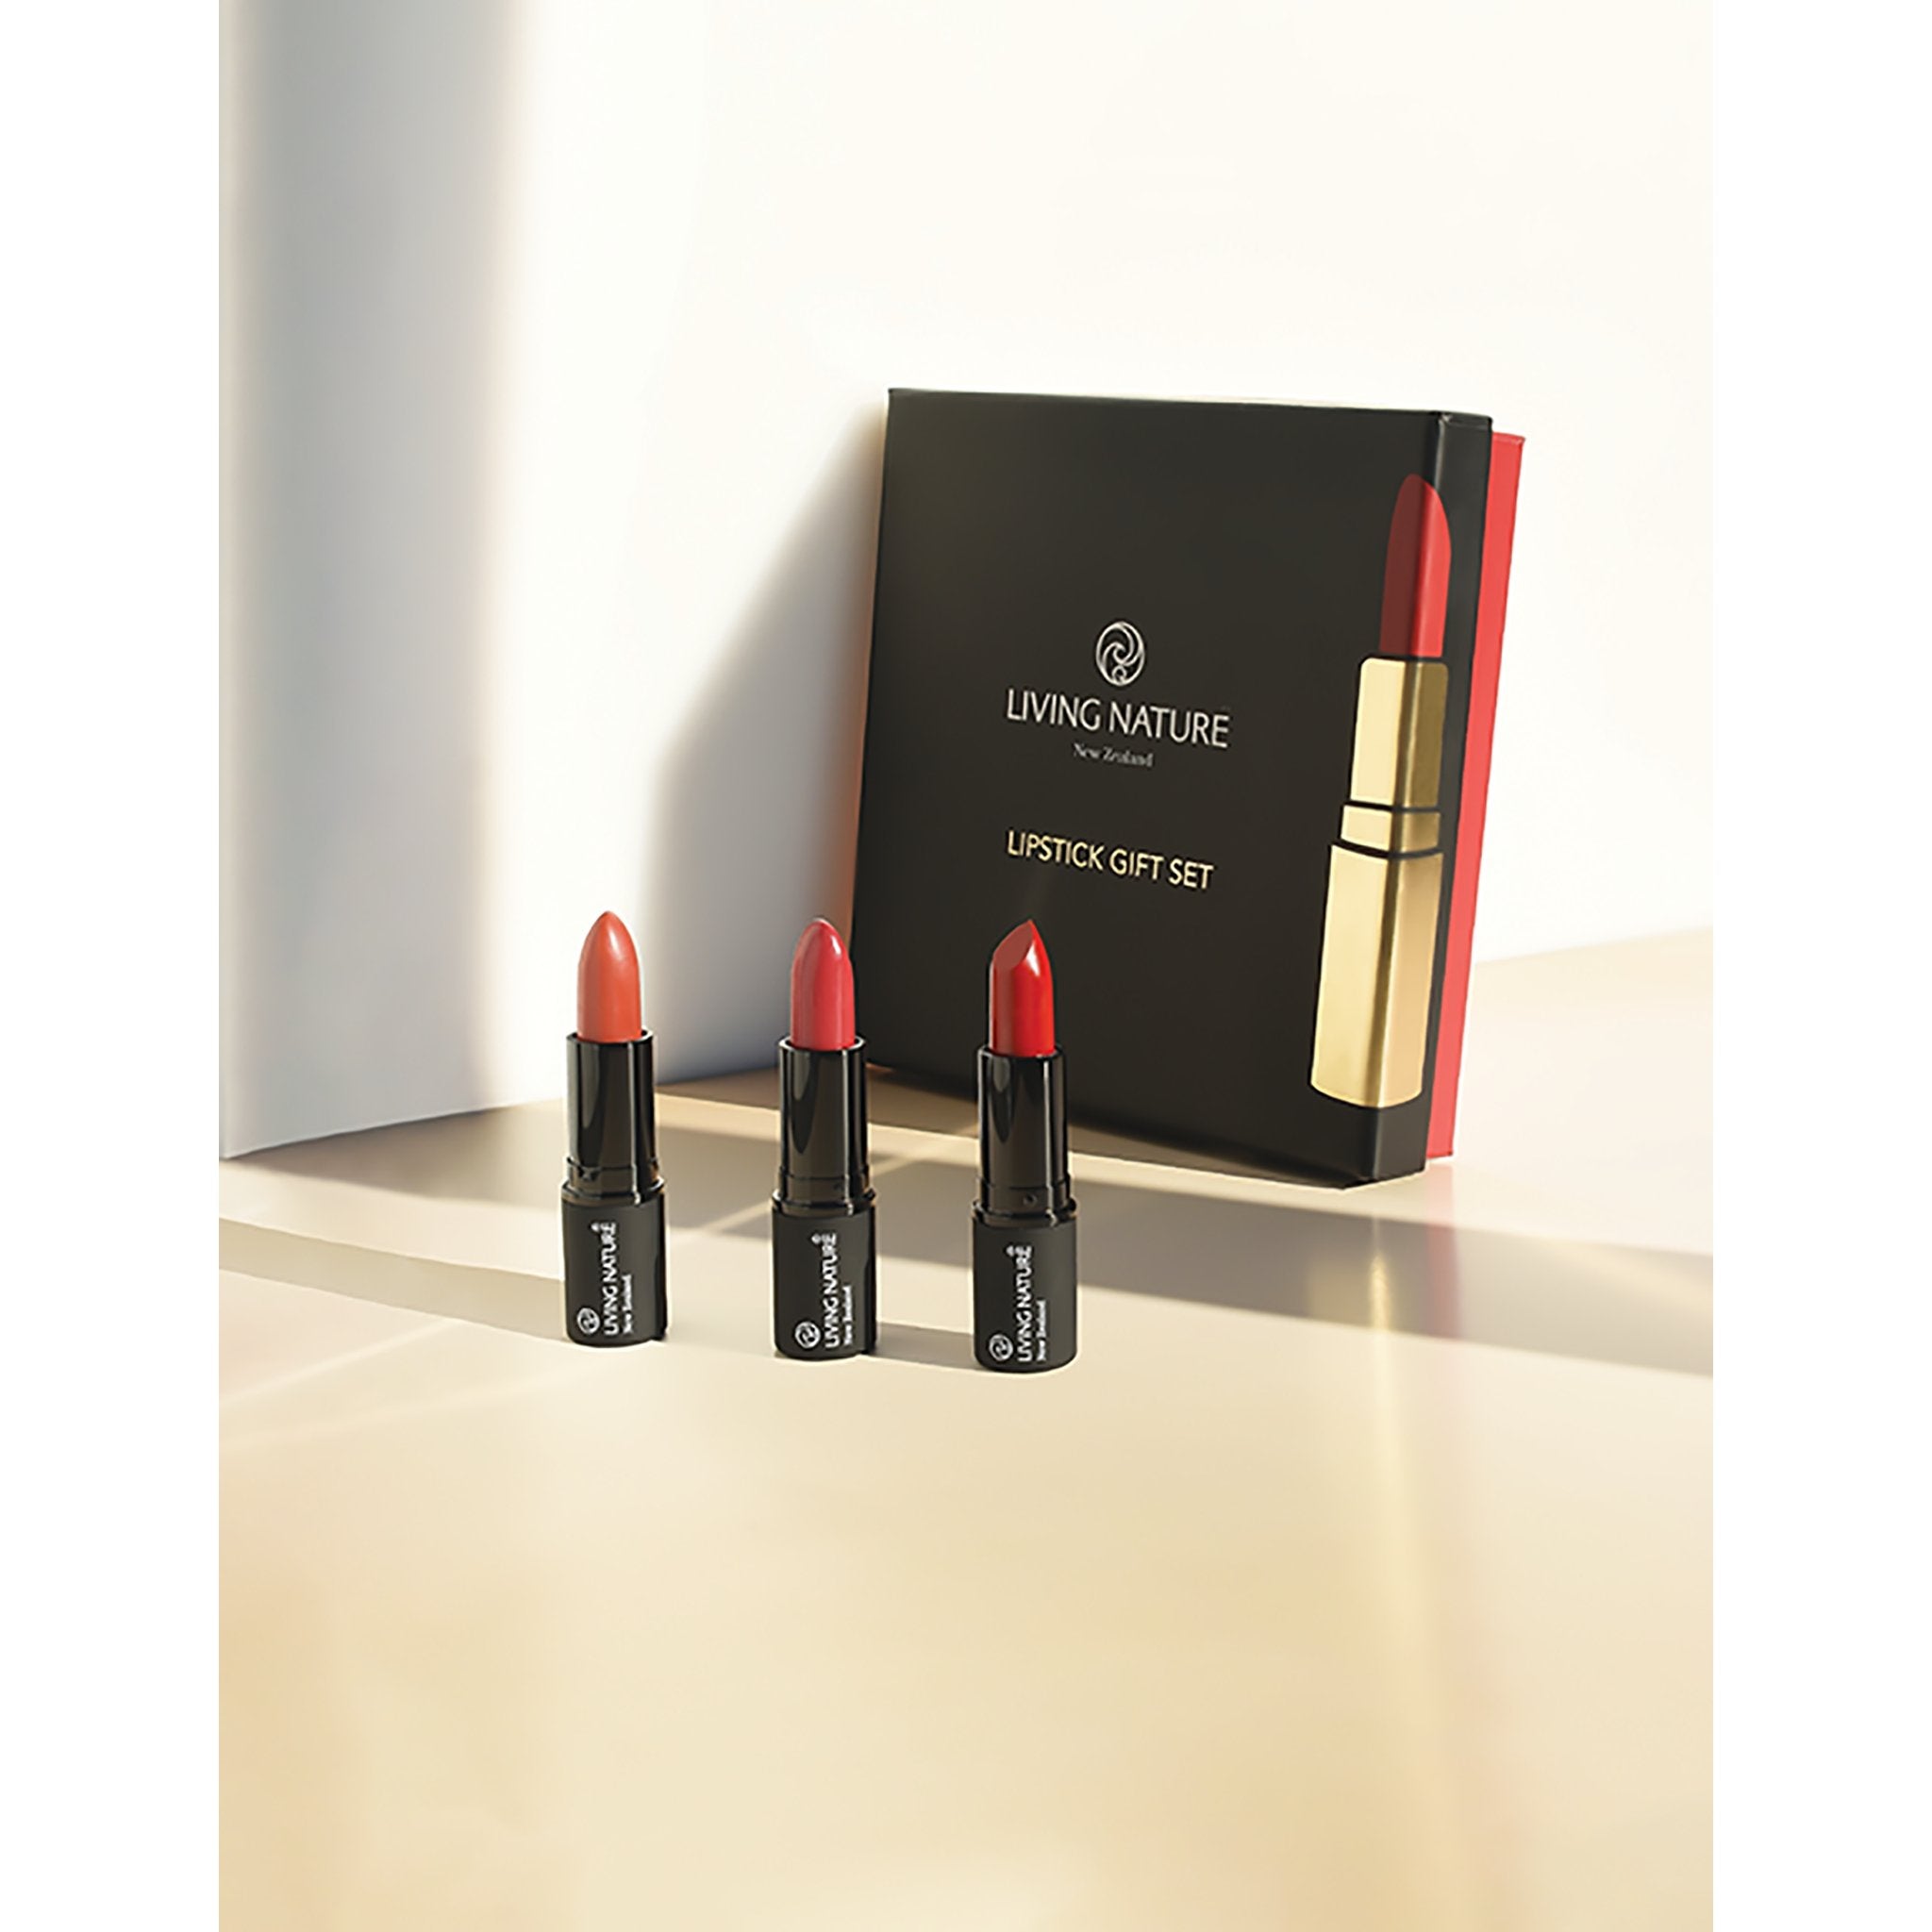 **BACK SOON** Lipstick Gift Set - Worth £60 - mypure.co.uk